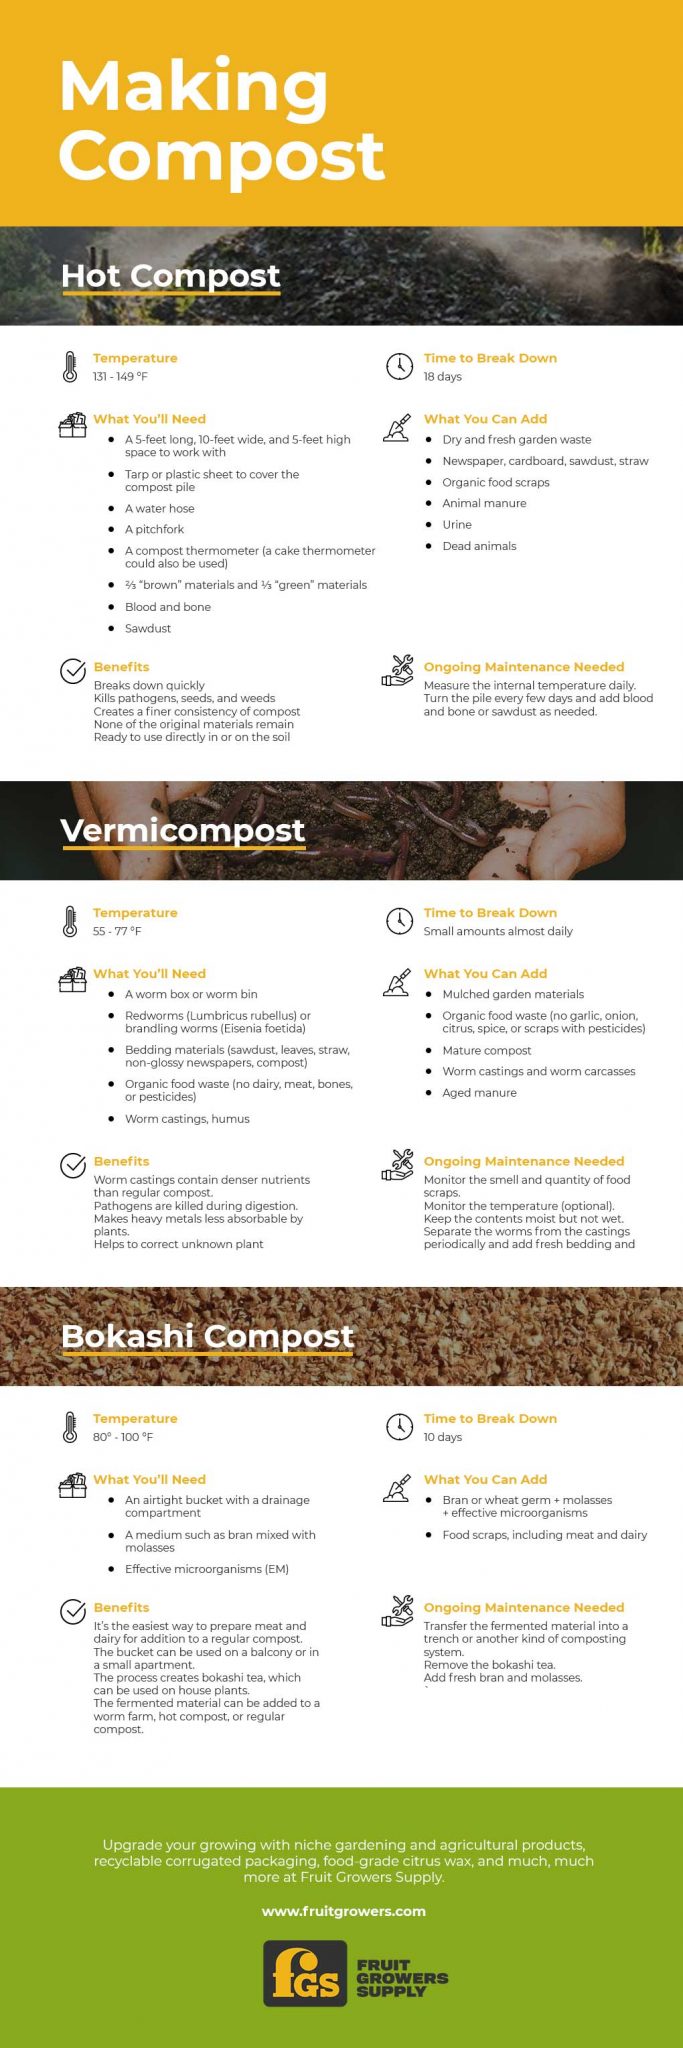 ways to make compost